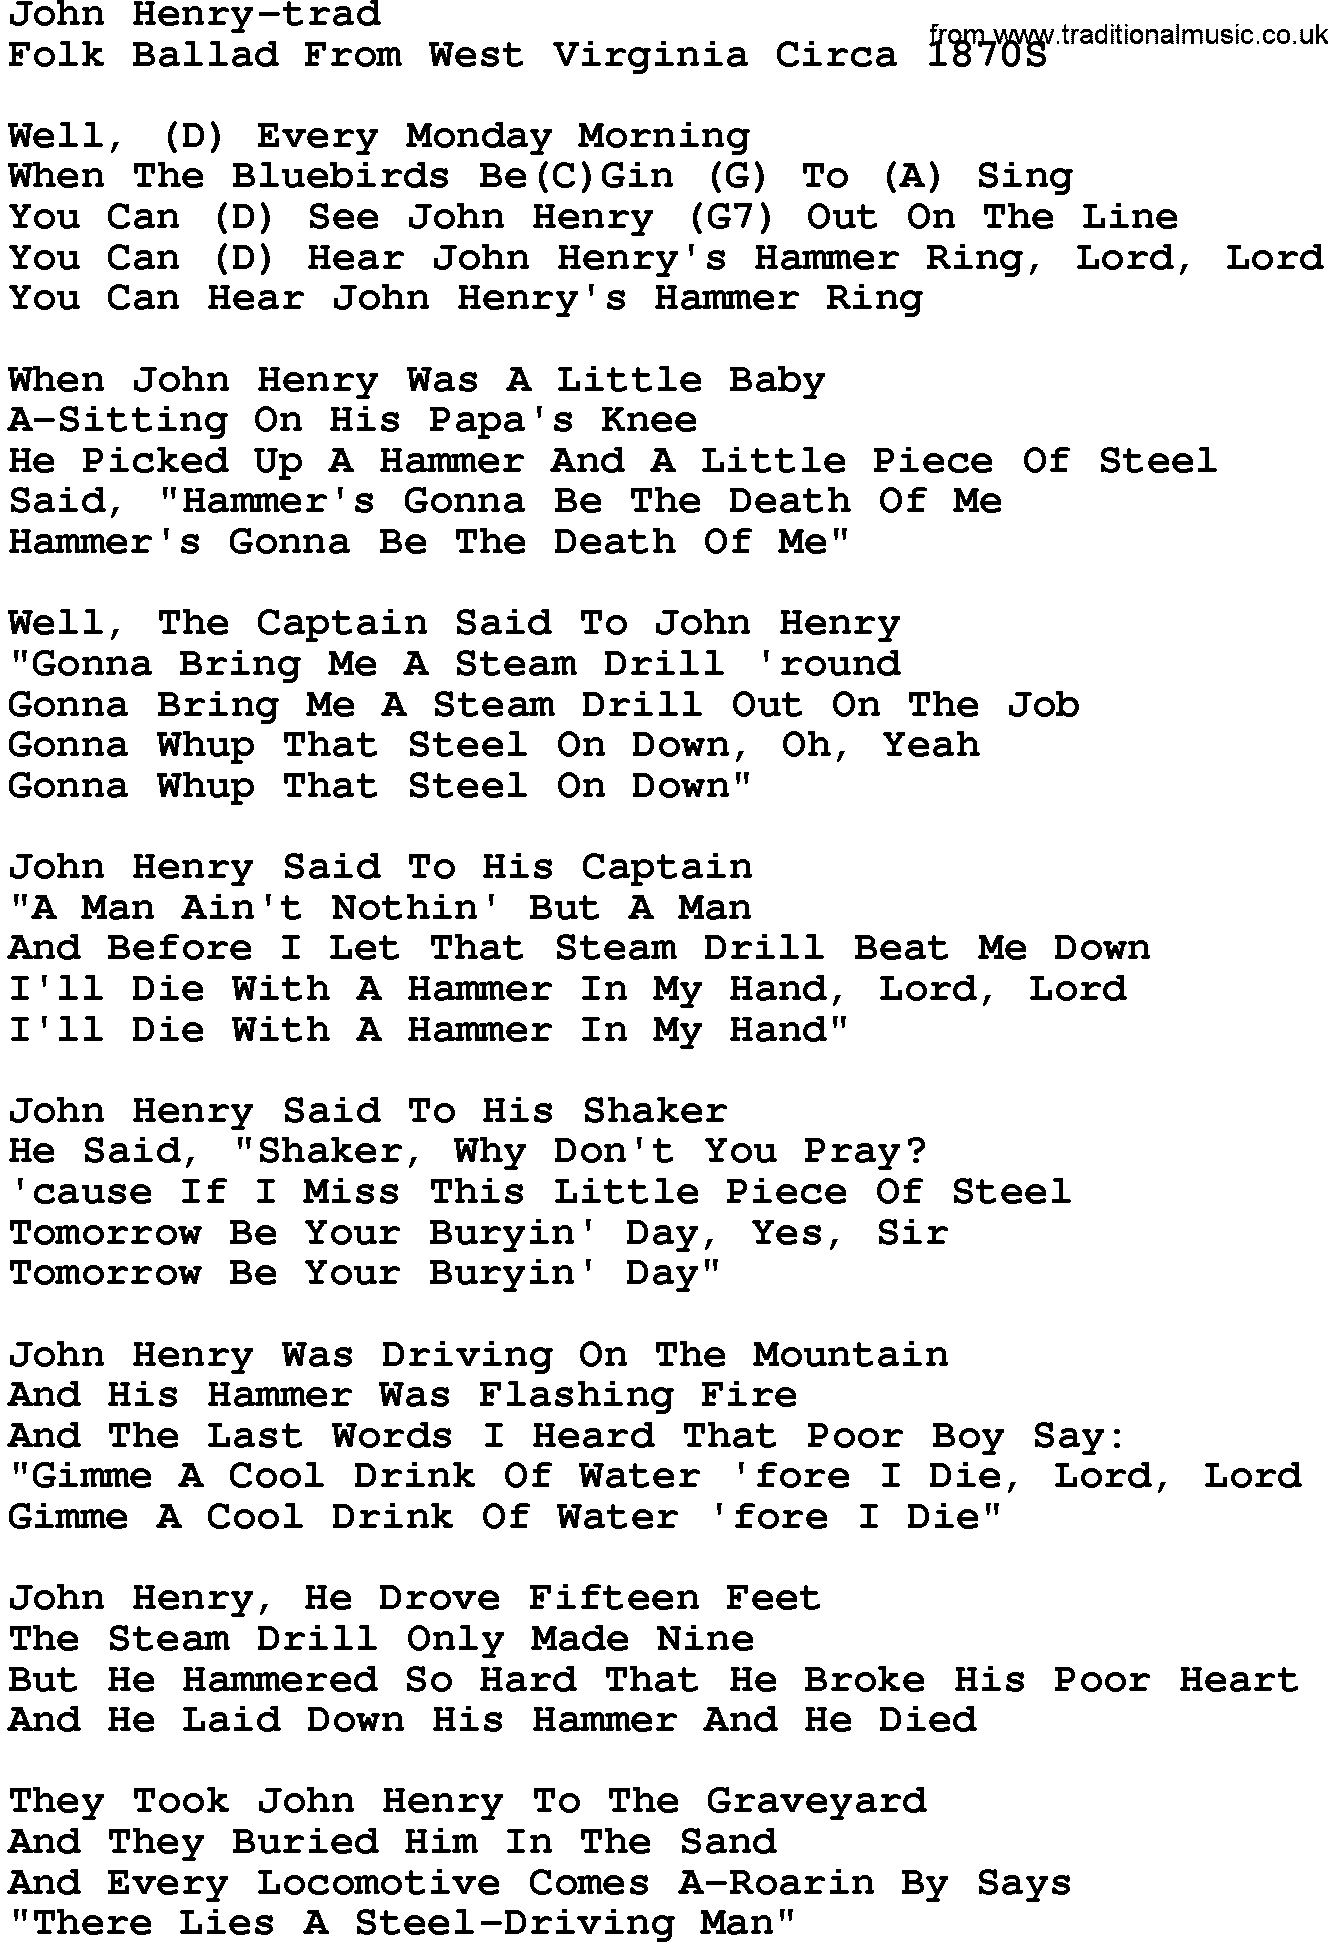 Country music song: John Henry-trad lyrics and chords